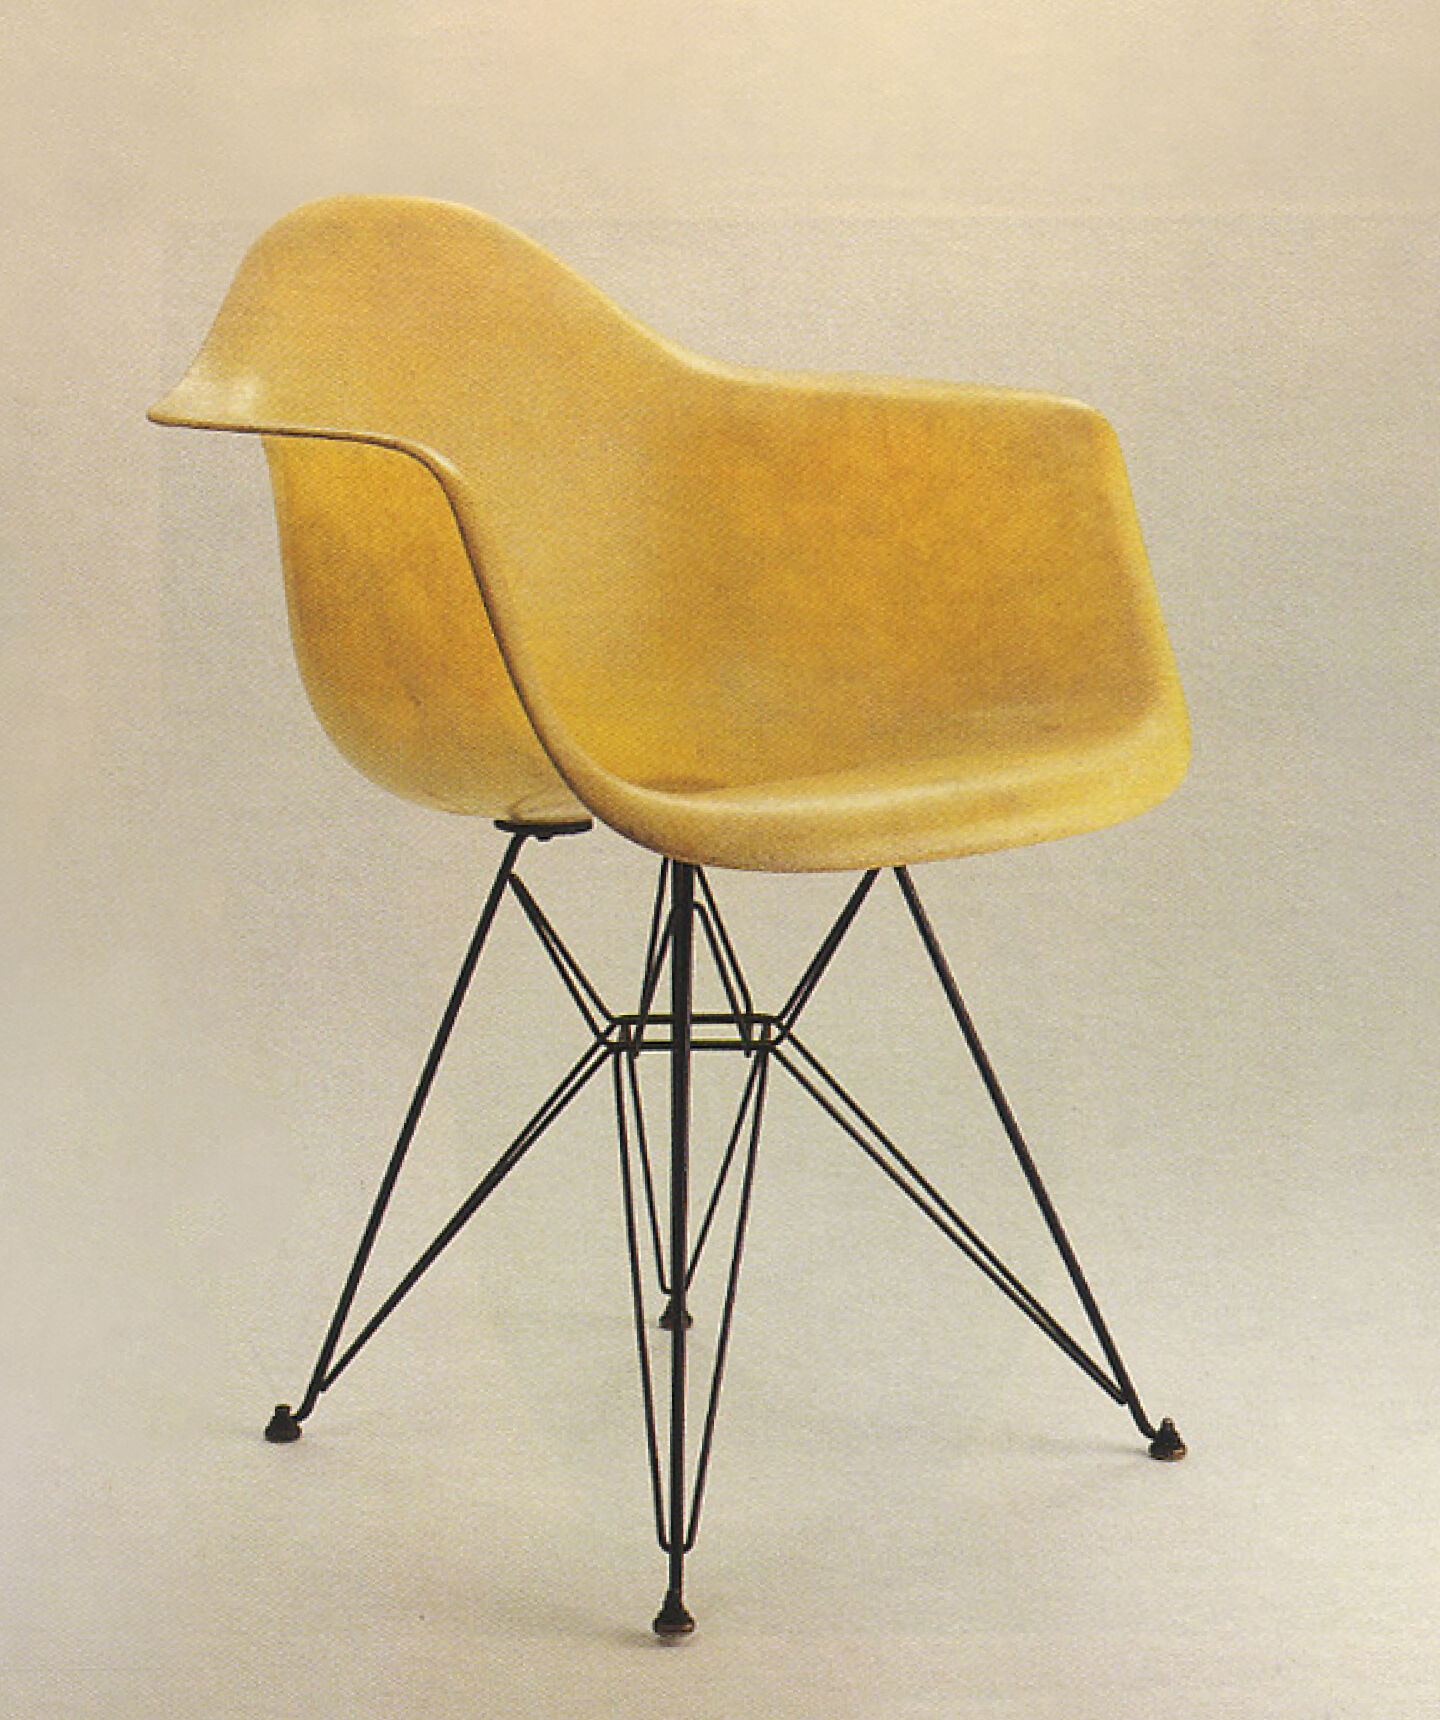 Classic Eames shell chair.